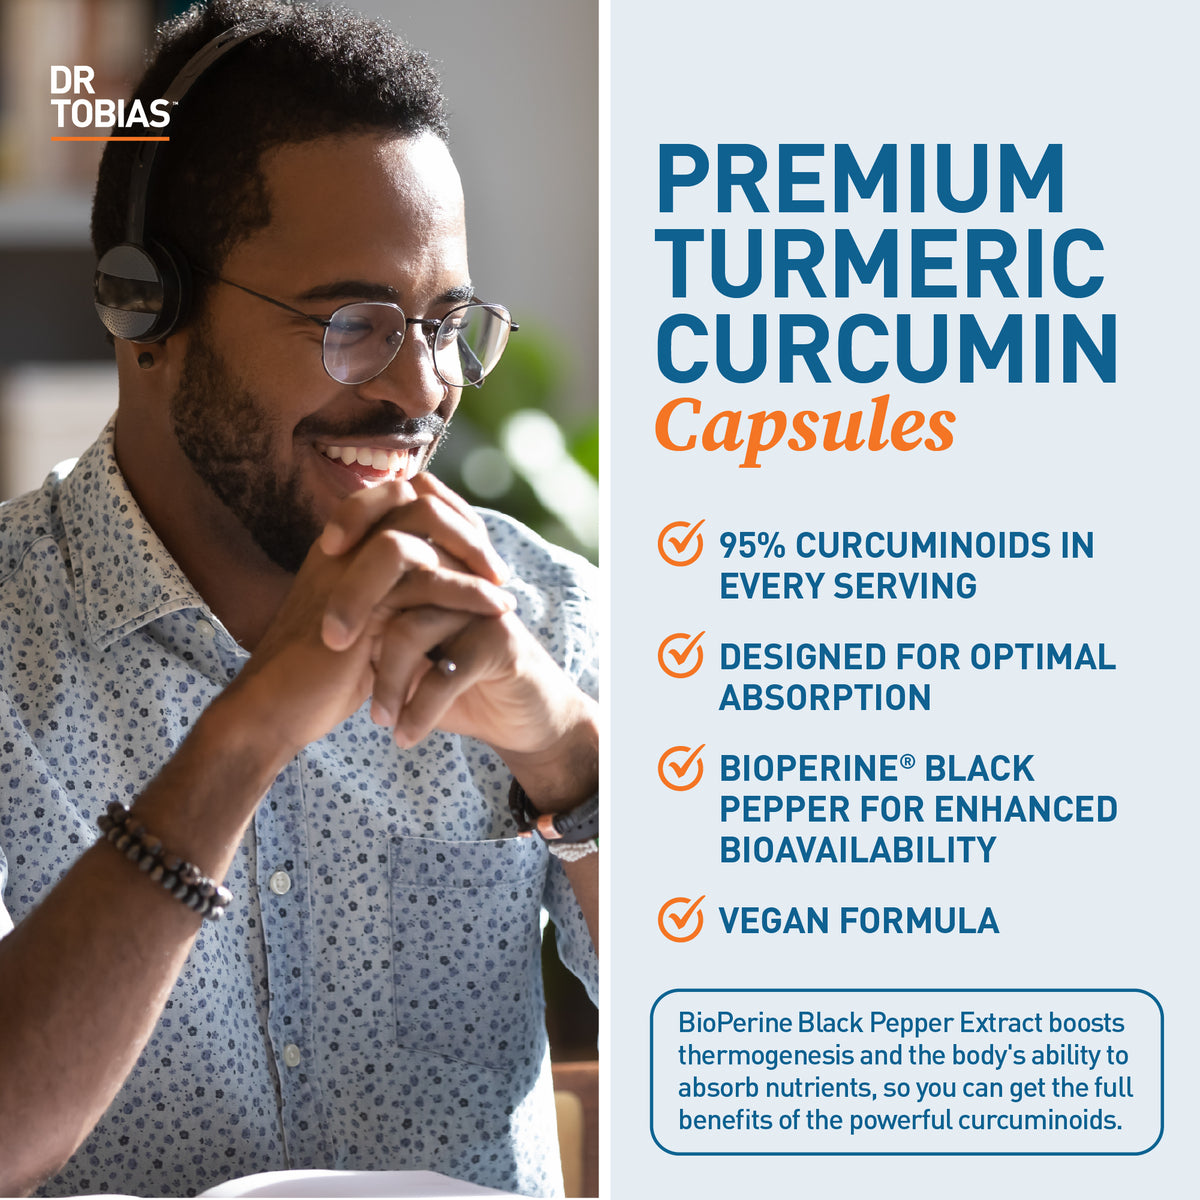 premium turmeric curcumin capsules - 95% curcuminoids in every serving, designed for optimal absorption, bioperine, vegan